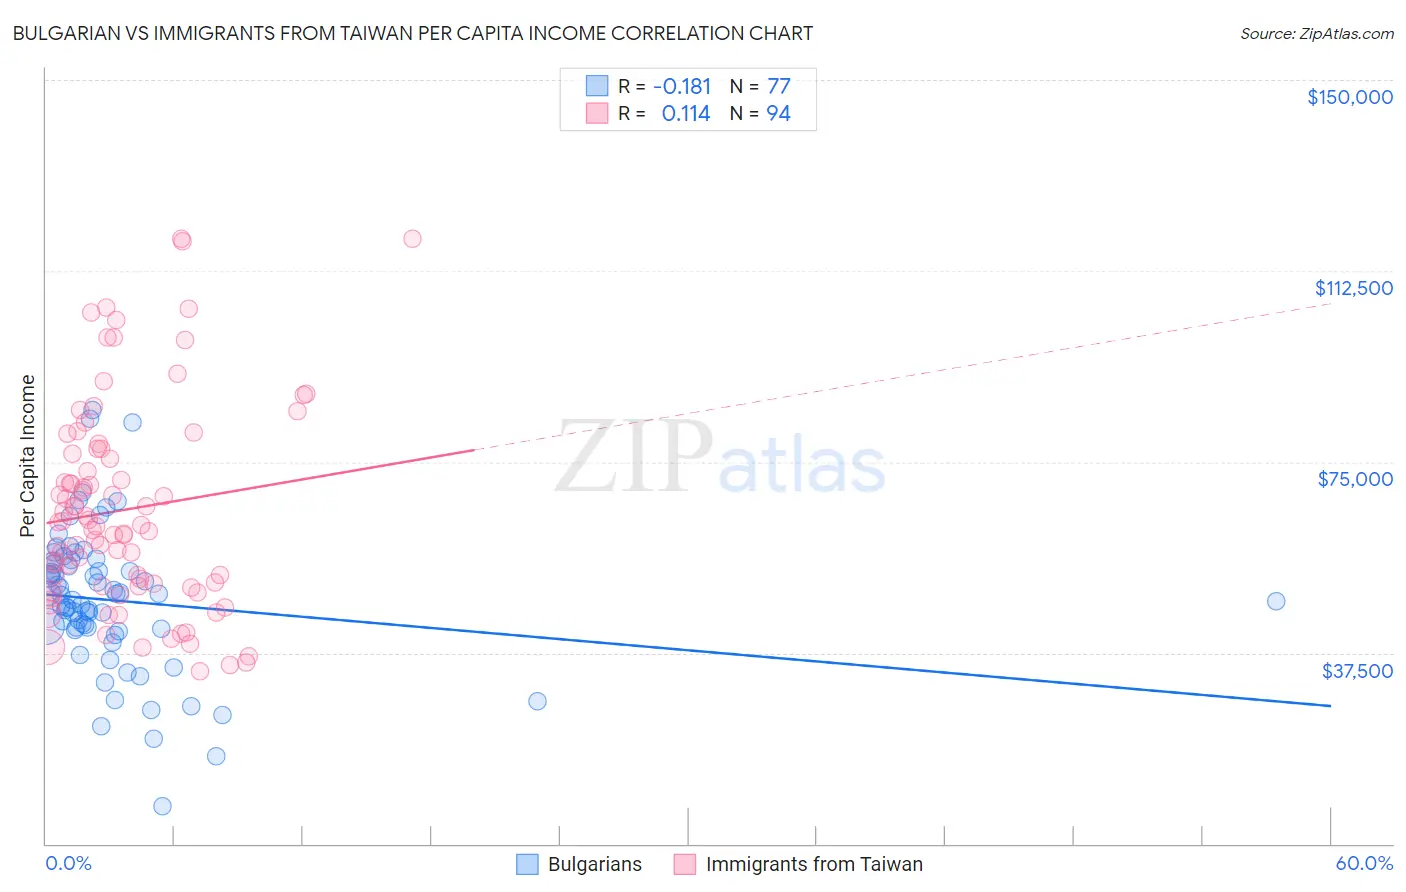 Bulgarian vs Immigrants from Taiwan Per Capita Income